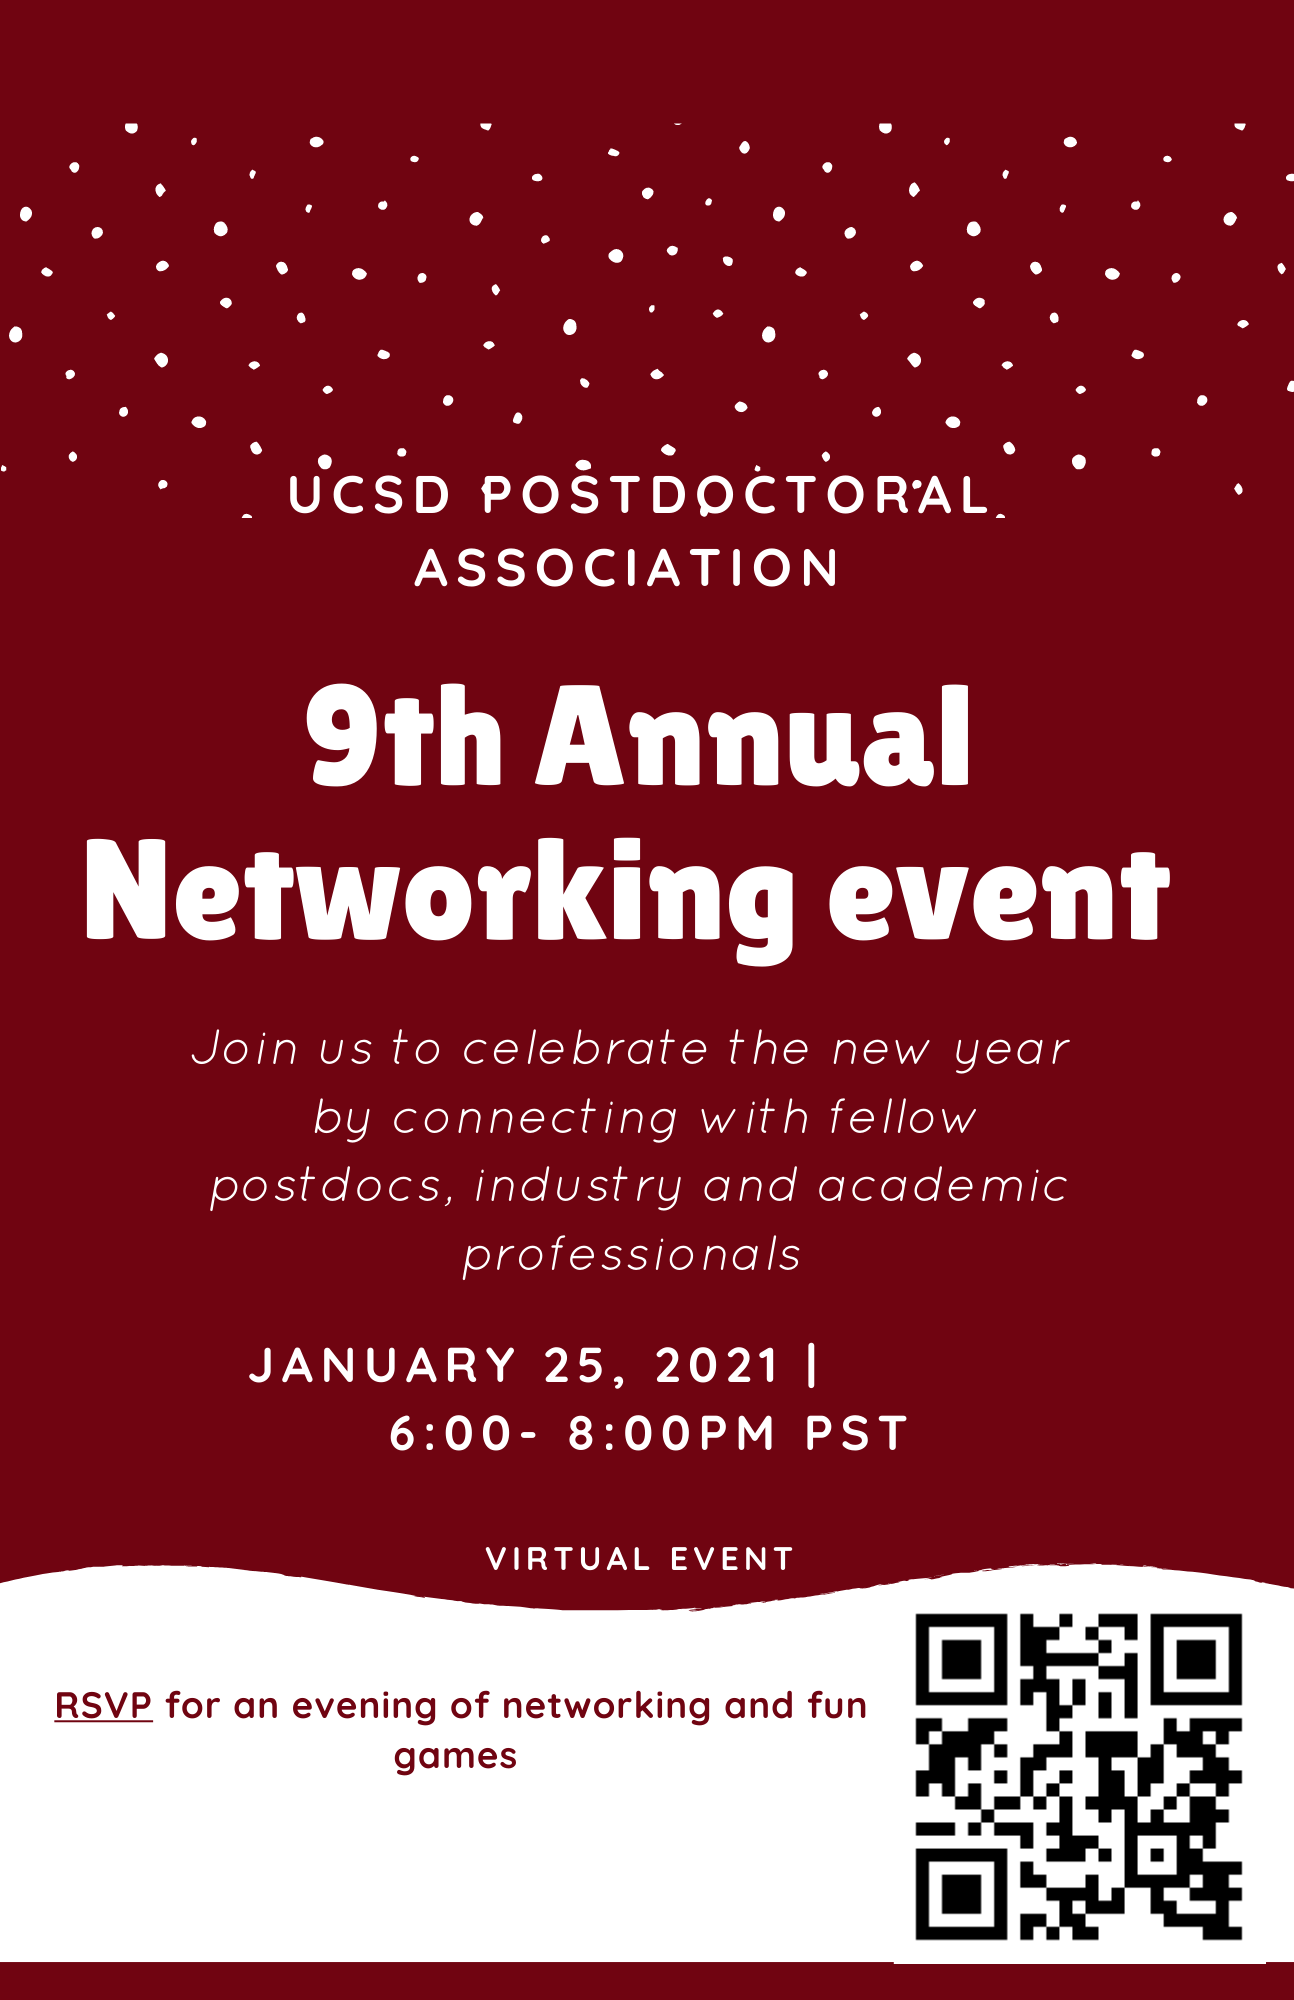 UCSD-Postdoctoral-association-2.png